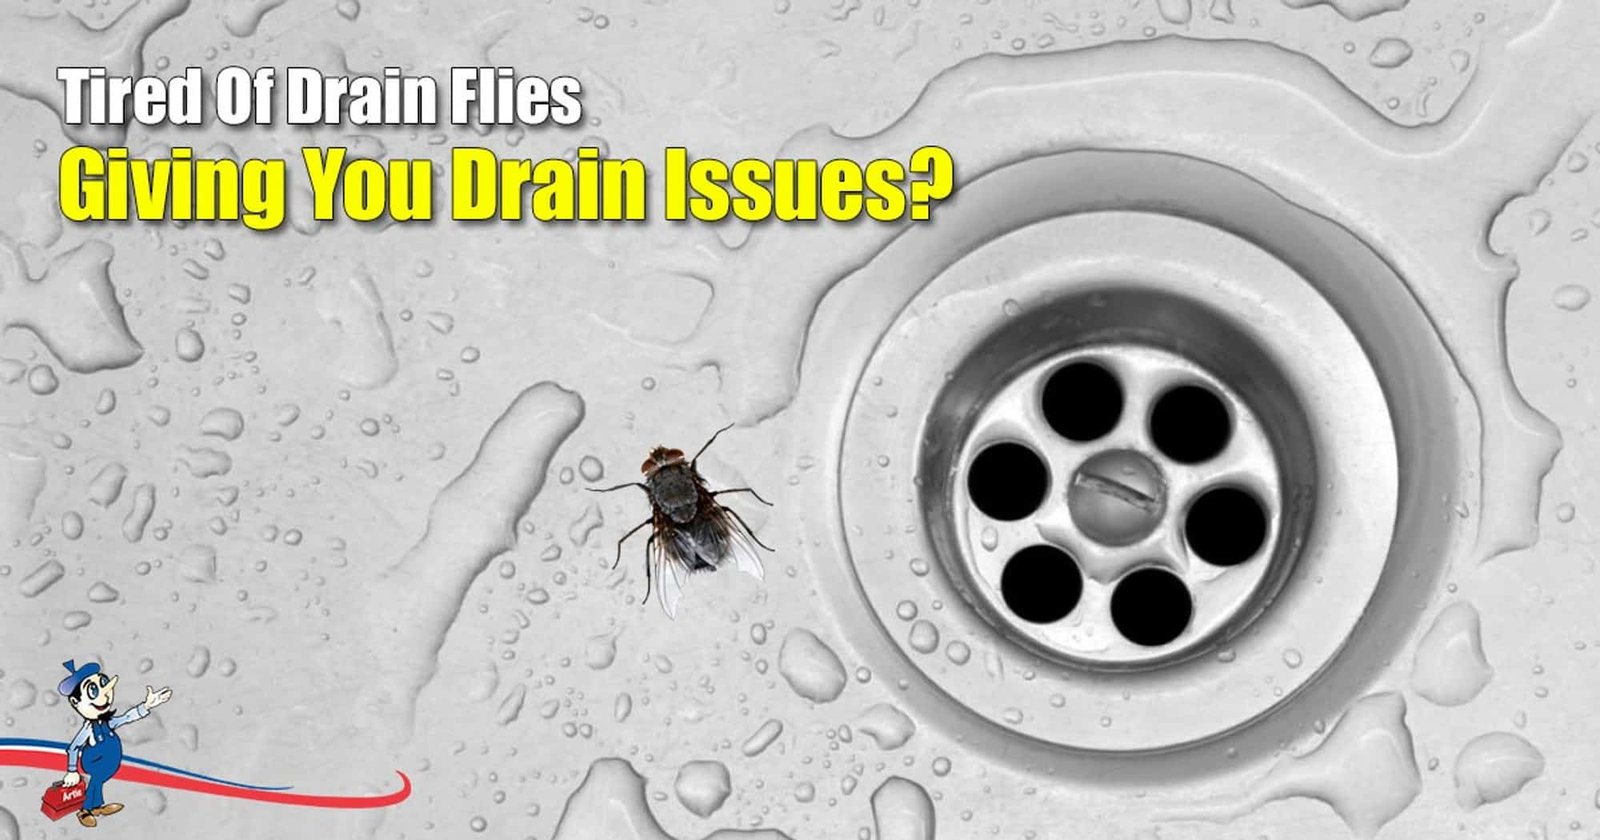 eliminate fruit flies in drain proven methods to get rid of pesky pests